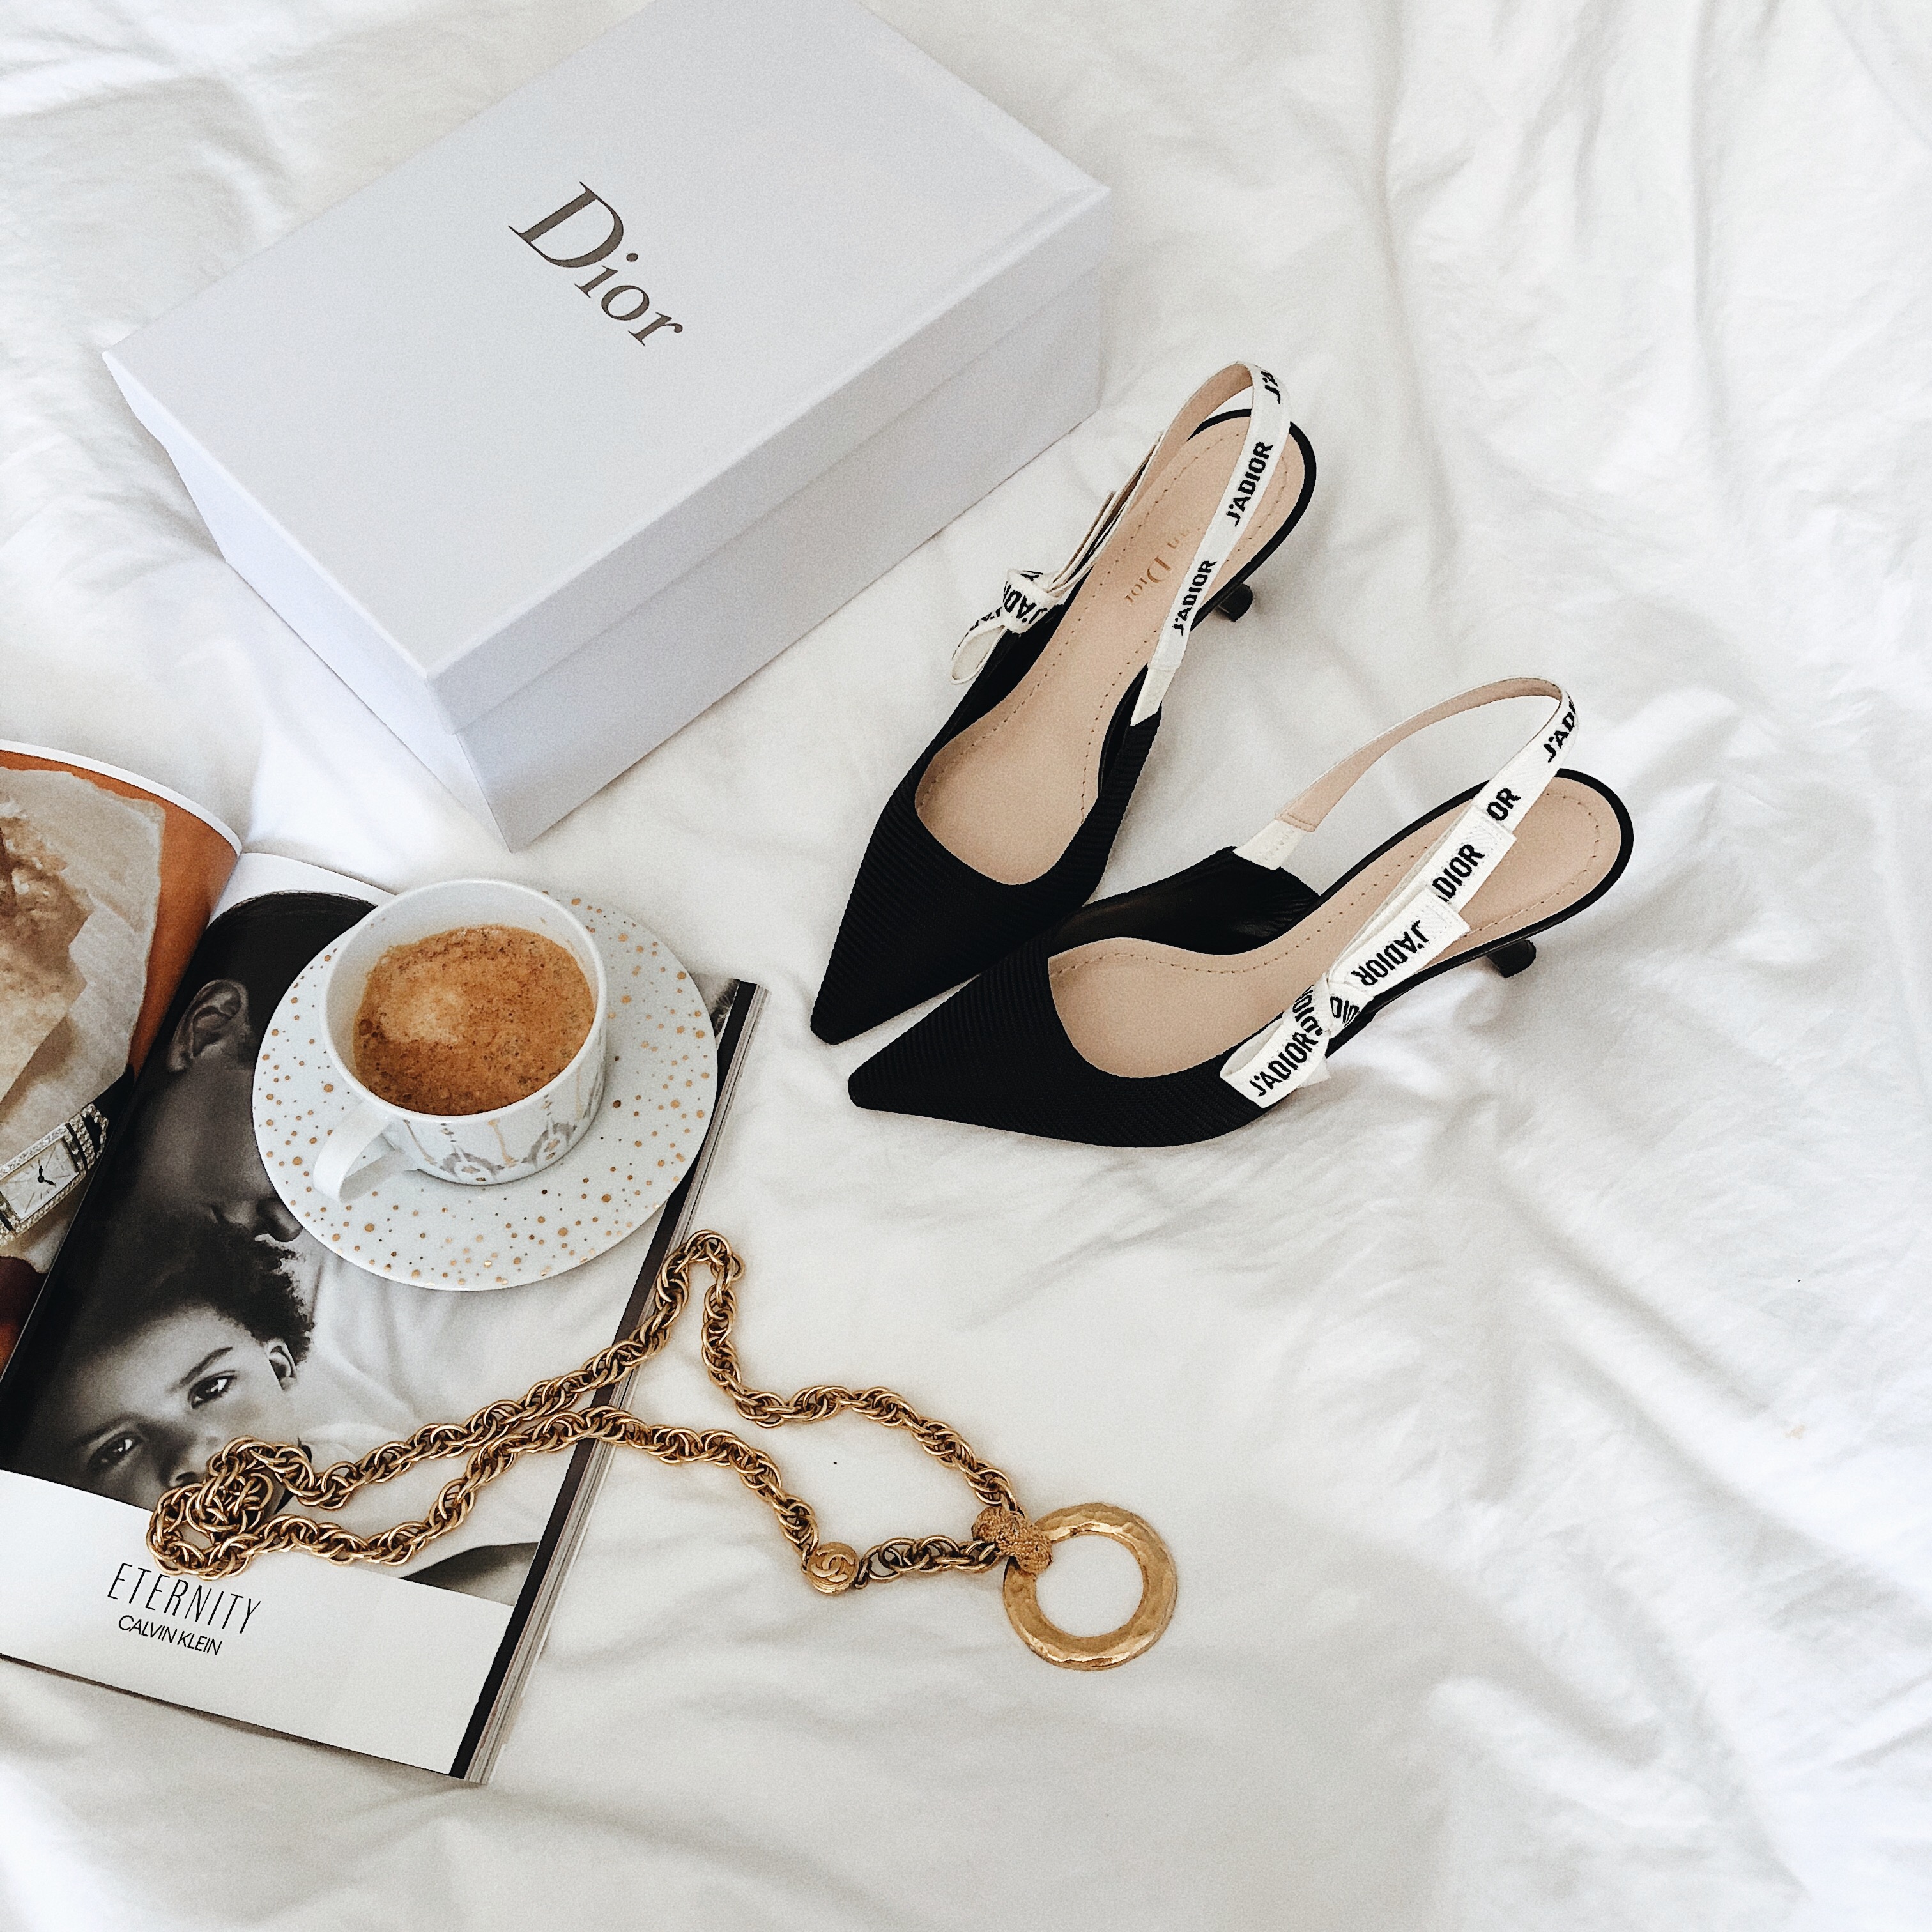 Christian Dior sling back shoes, Dior sling backs, christian Dior shoes, helena glazer via Brooklyn blonde. 